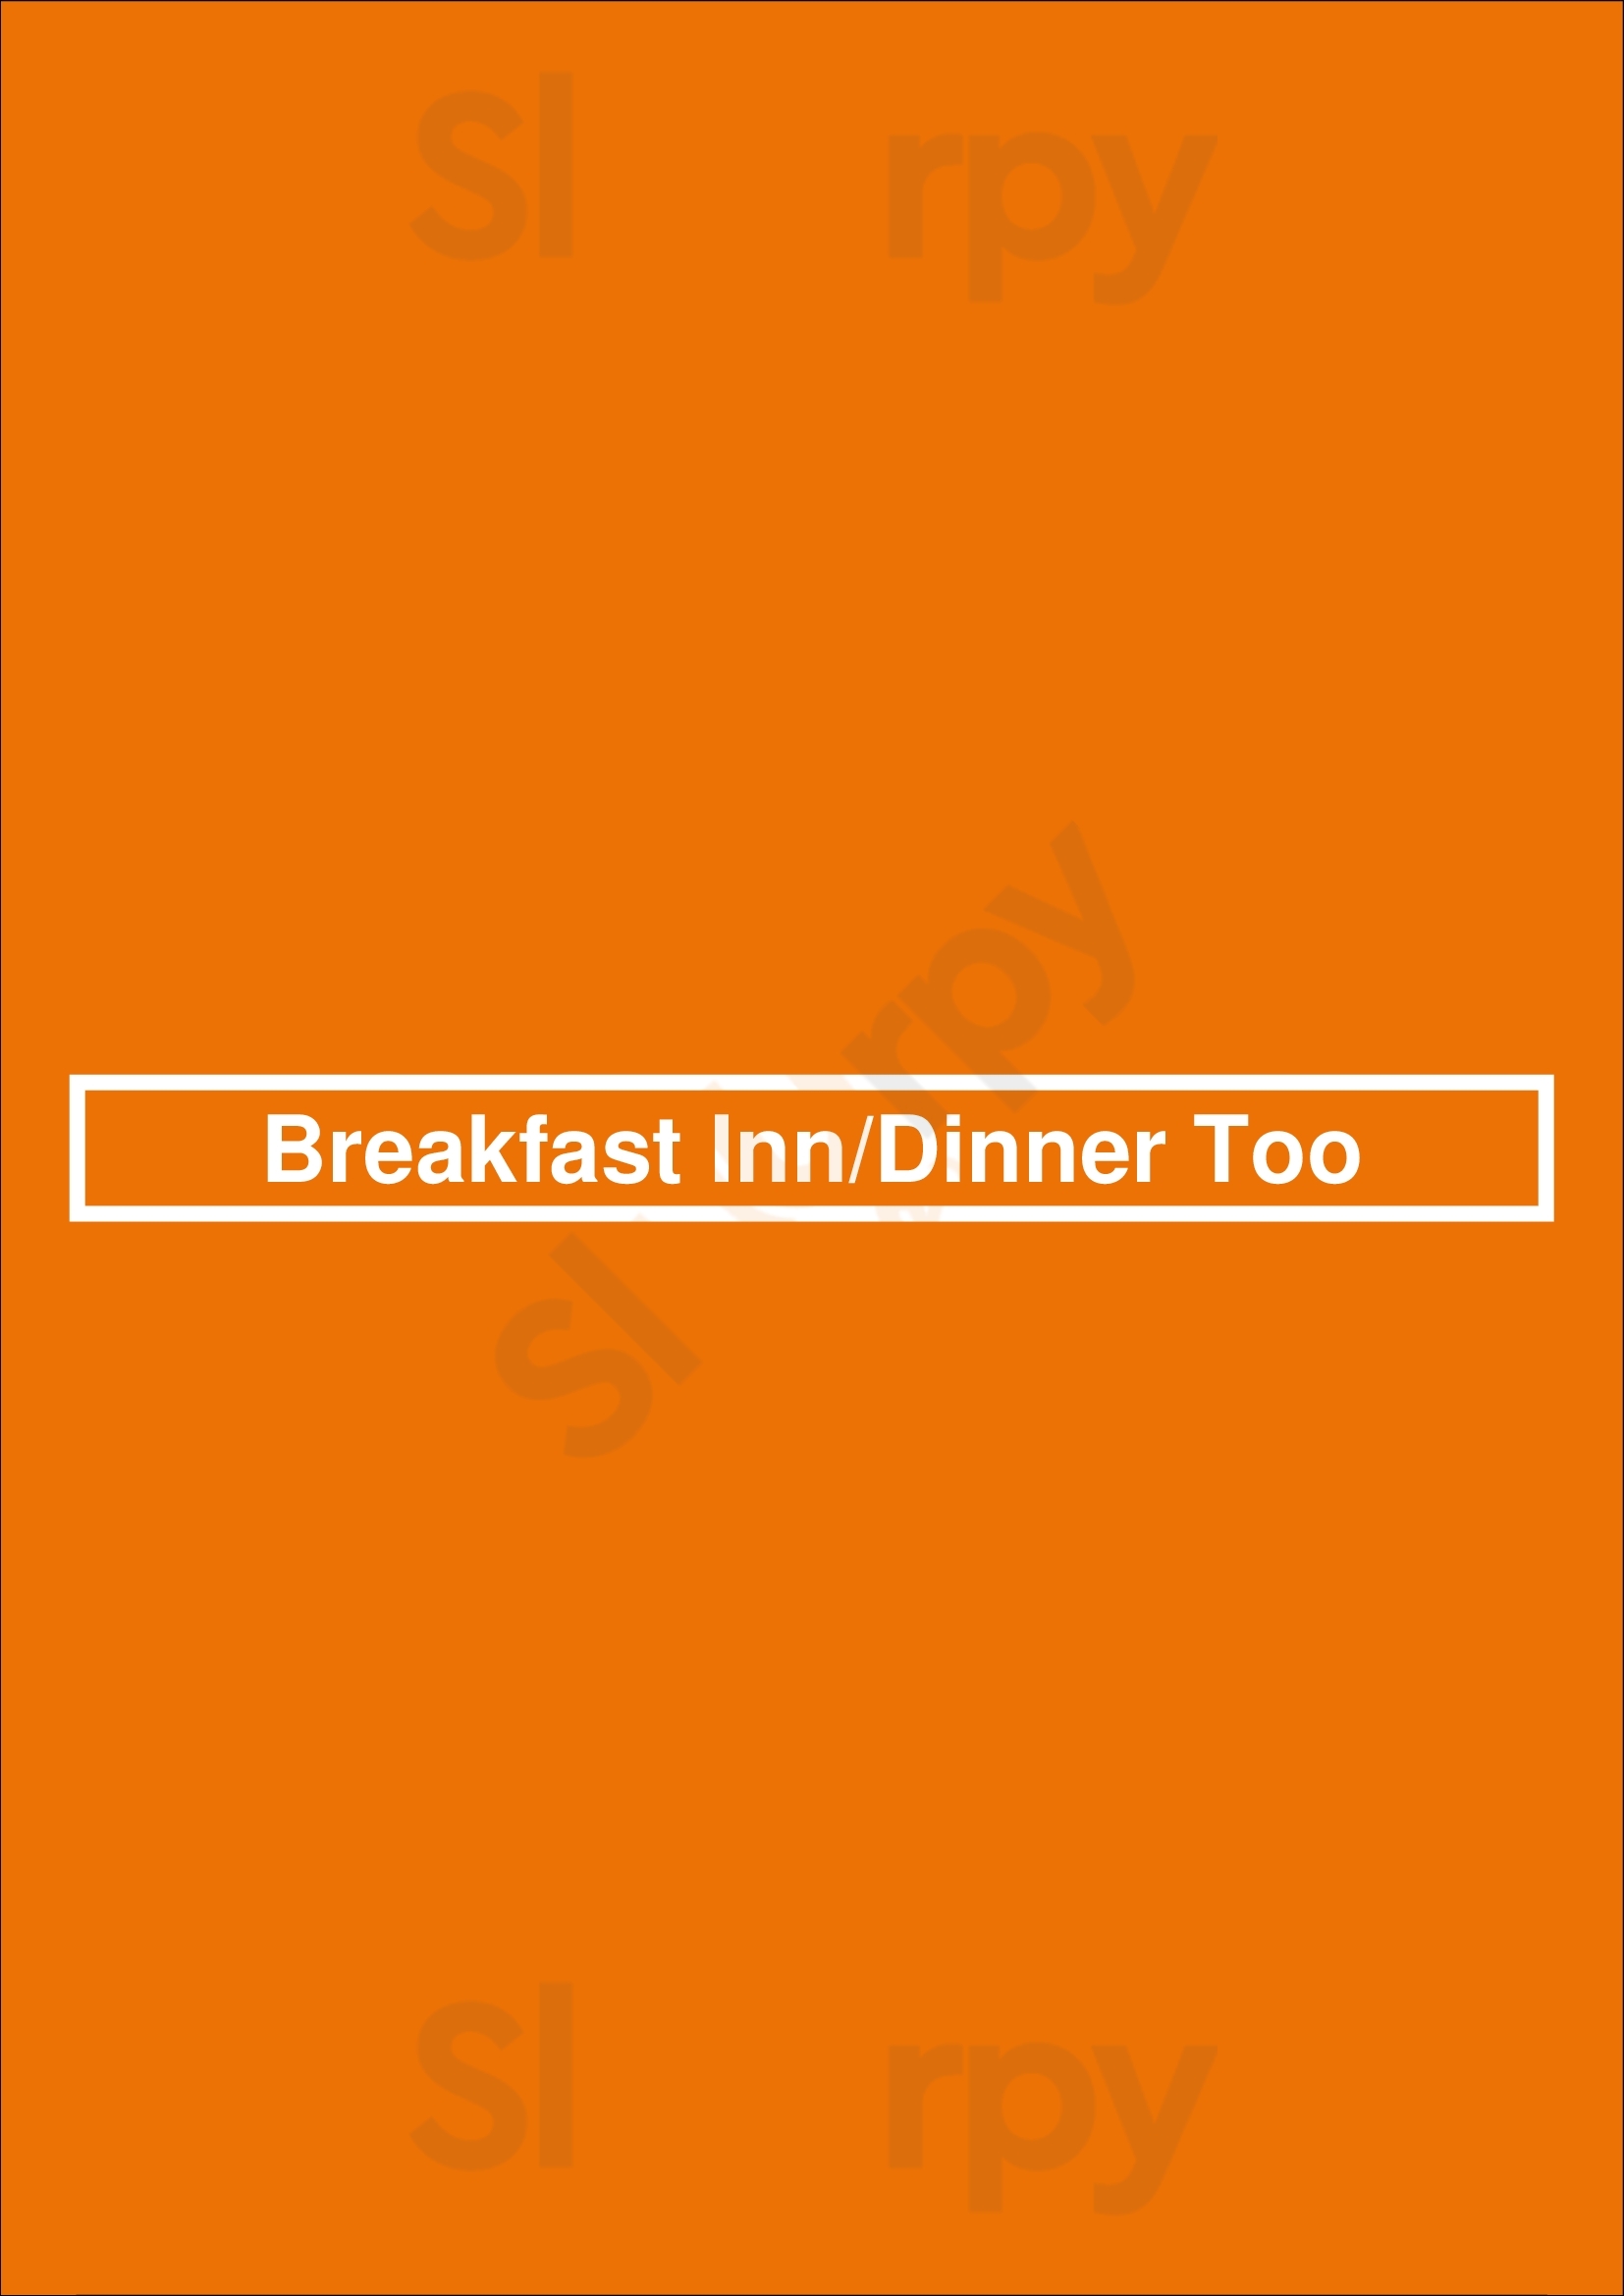 Breakfast Inn/dinner Too Denver Menu - 1